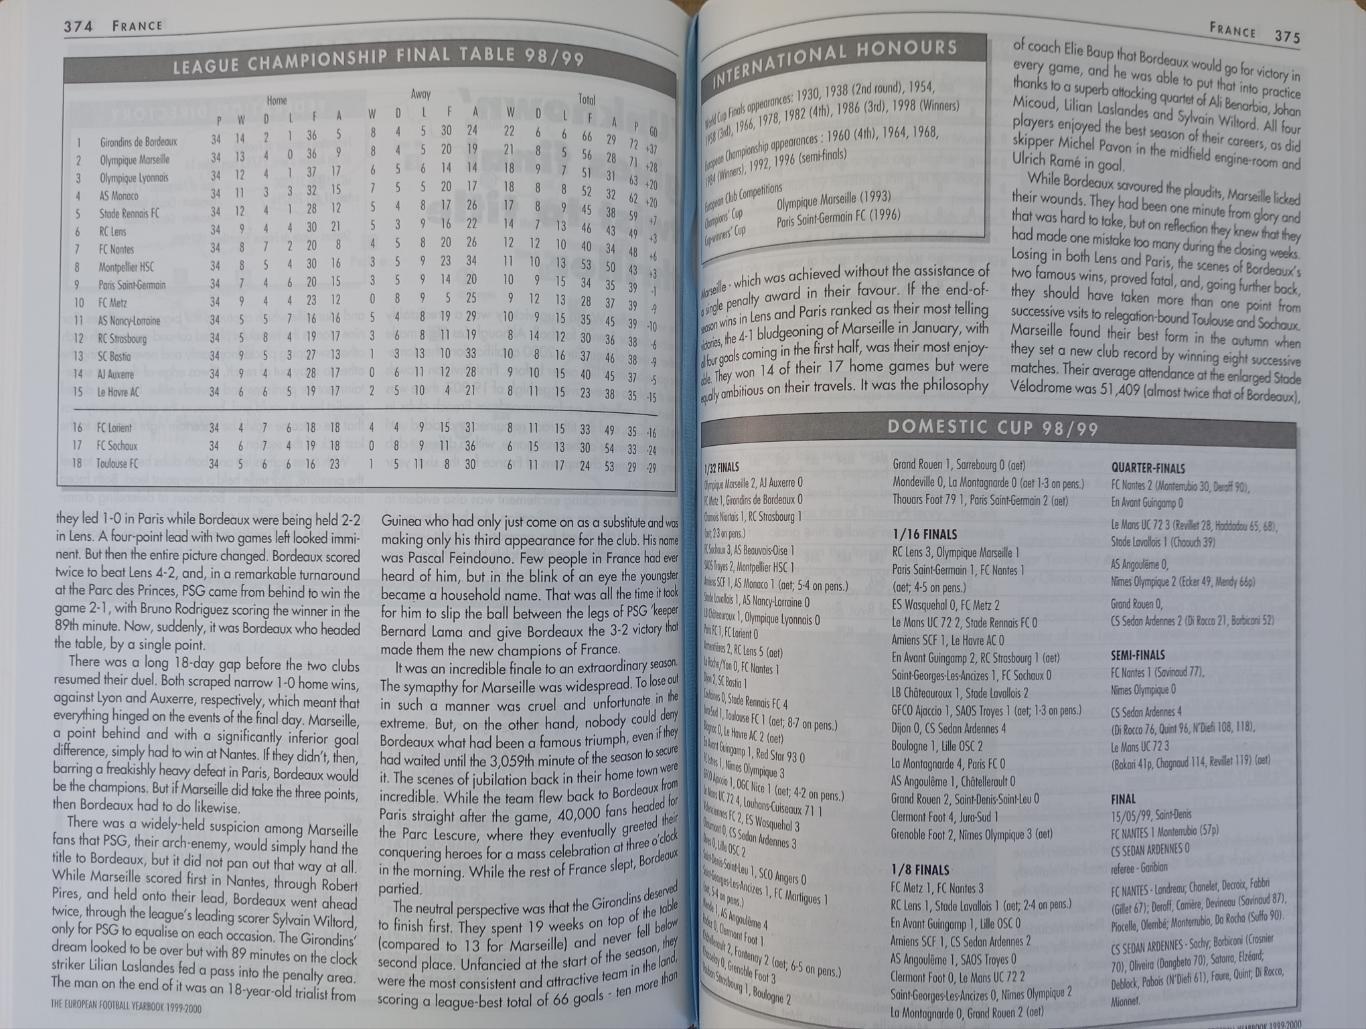 The European Football Yearbook (Ежегодник европейского футбола) 2